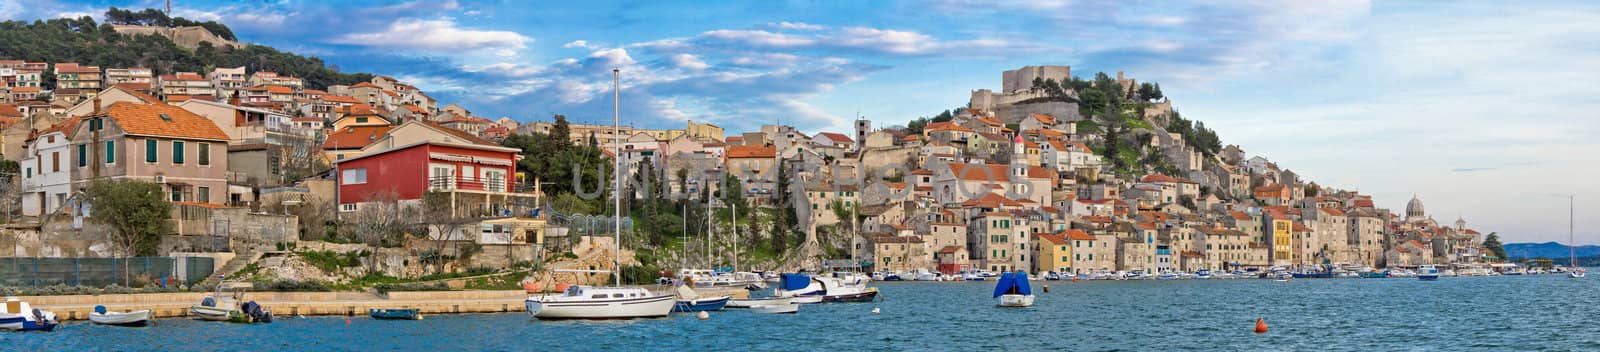 Historic town of Sibenik waterfront panorama, Dalmatia, Croatia